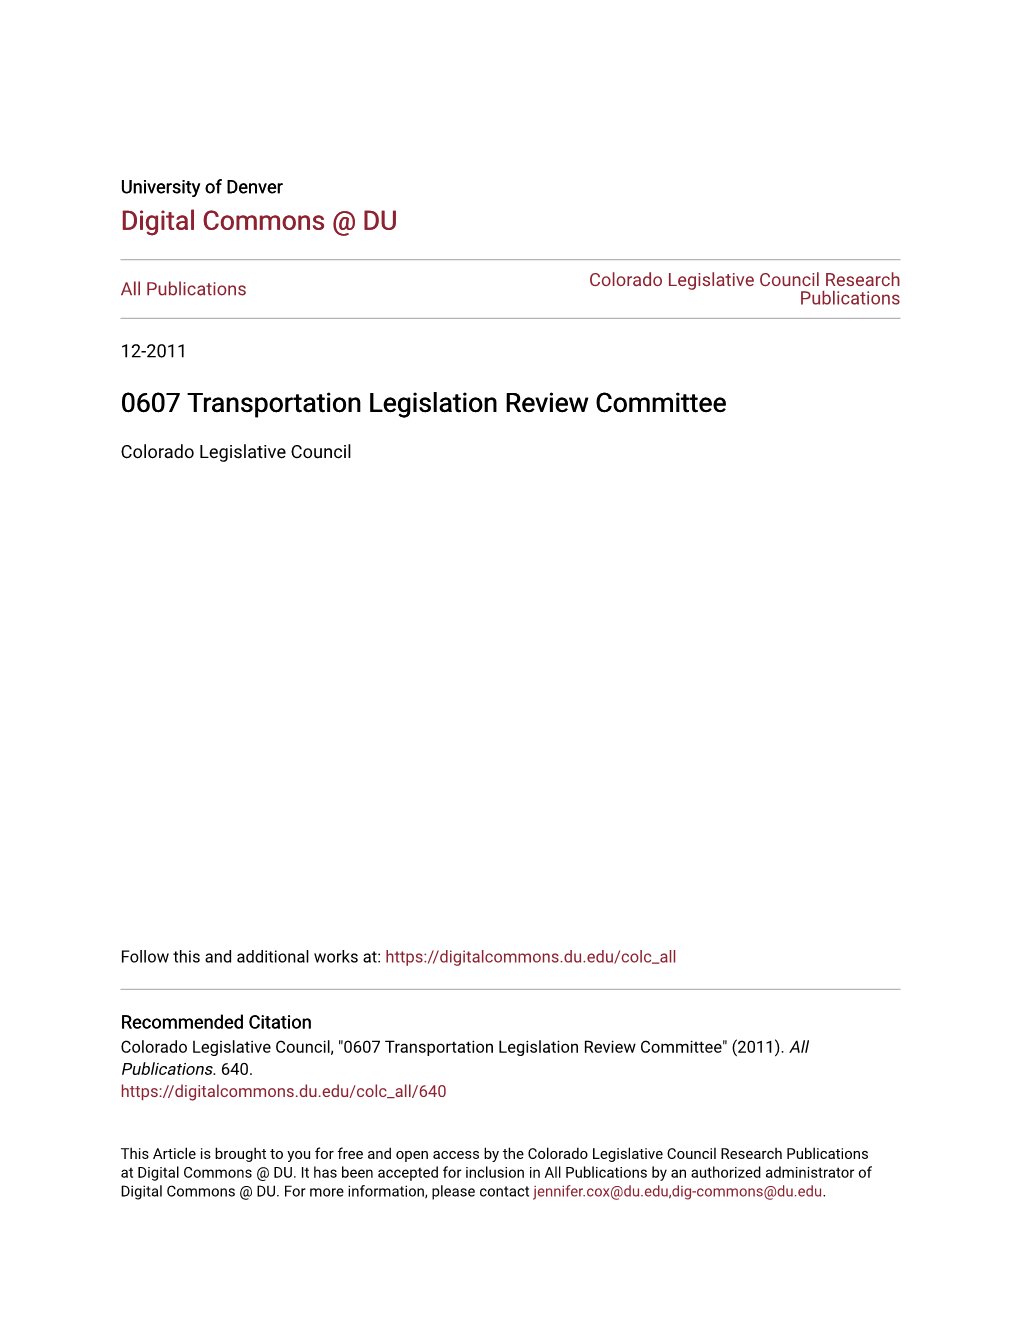 0607 Transportation Legislation Review Committee